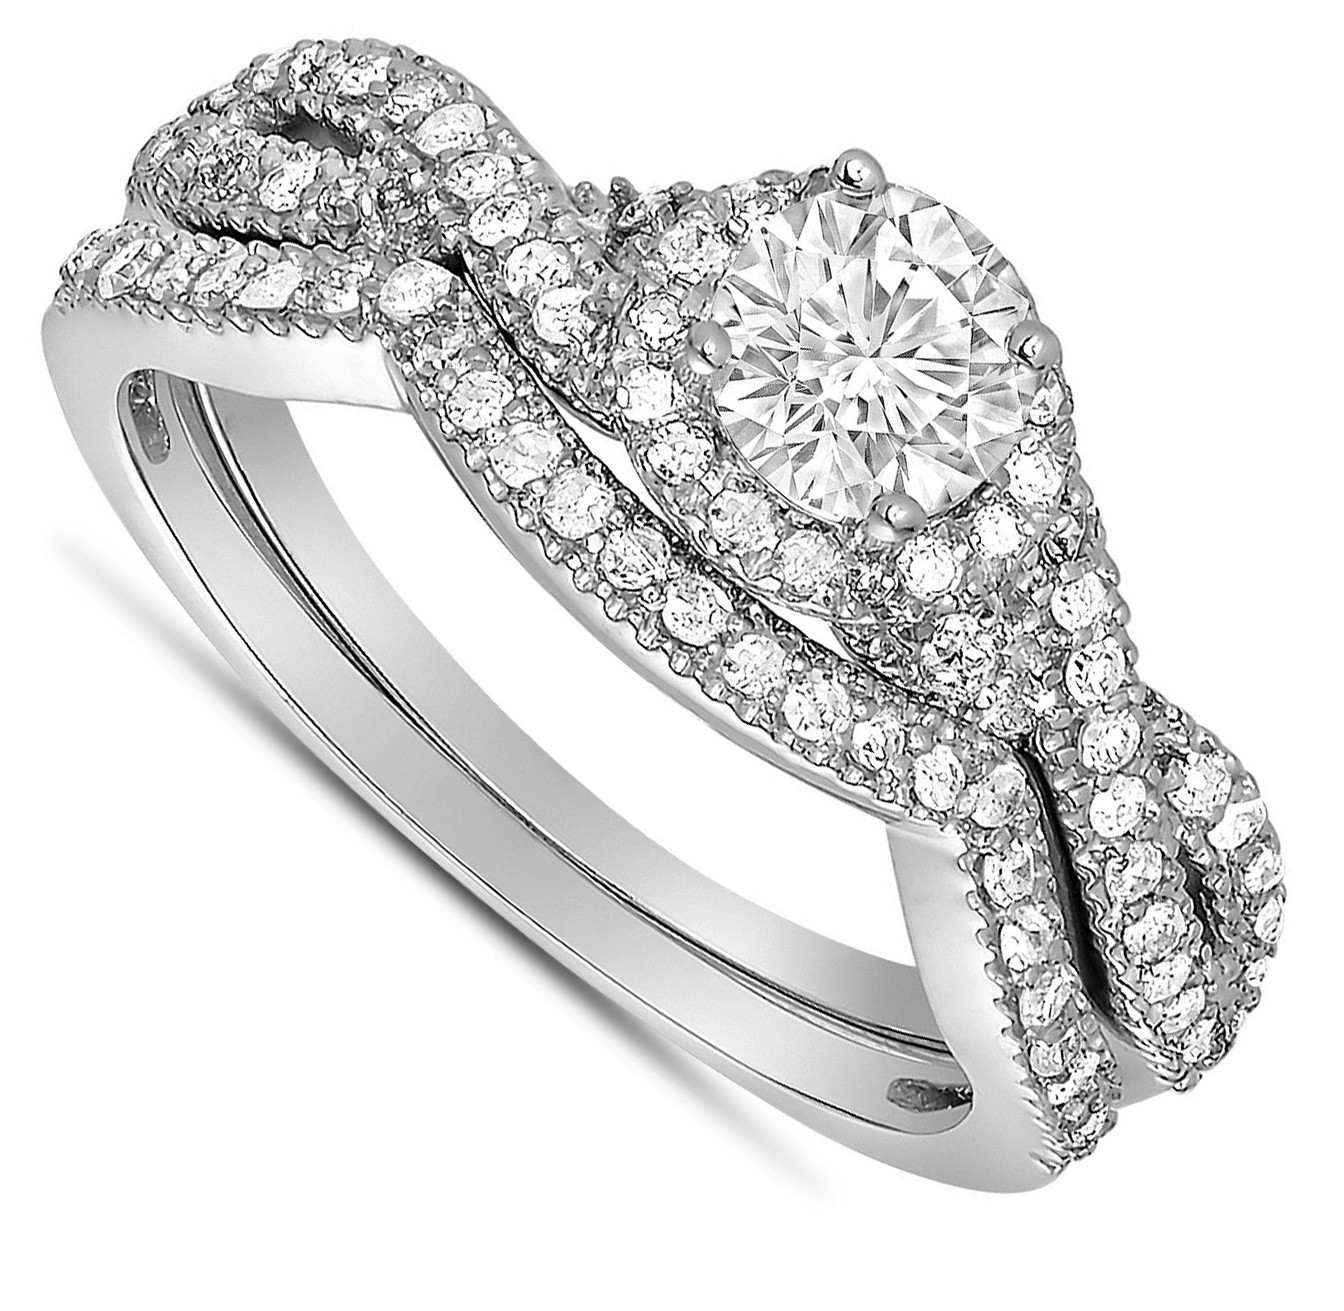 Diamond Wedding Ring Sets For Her
 2 Carat Round Diamond Infinity Wedding Ring Set in White